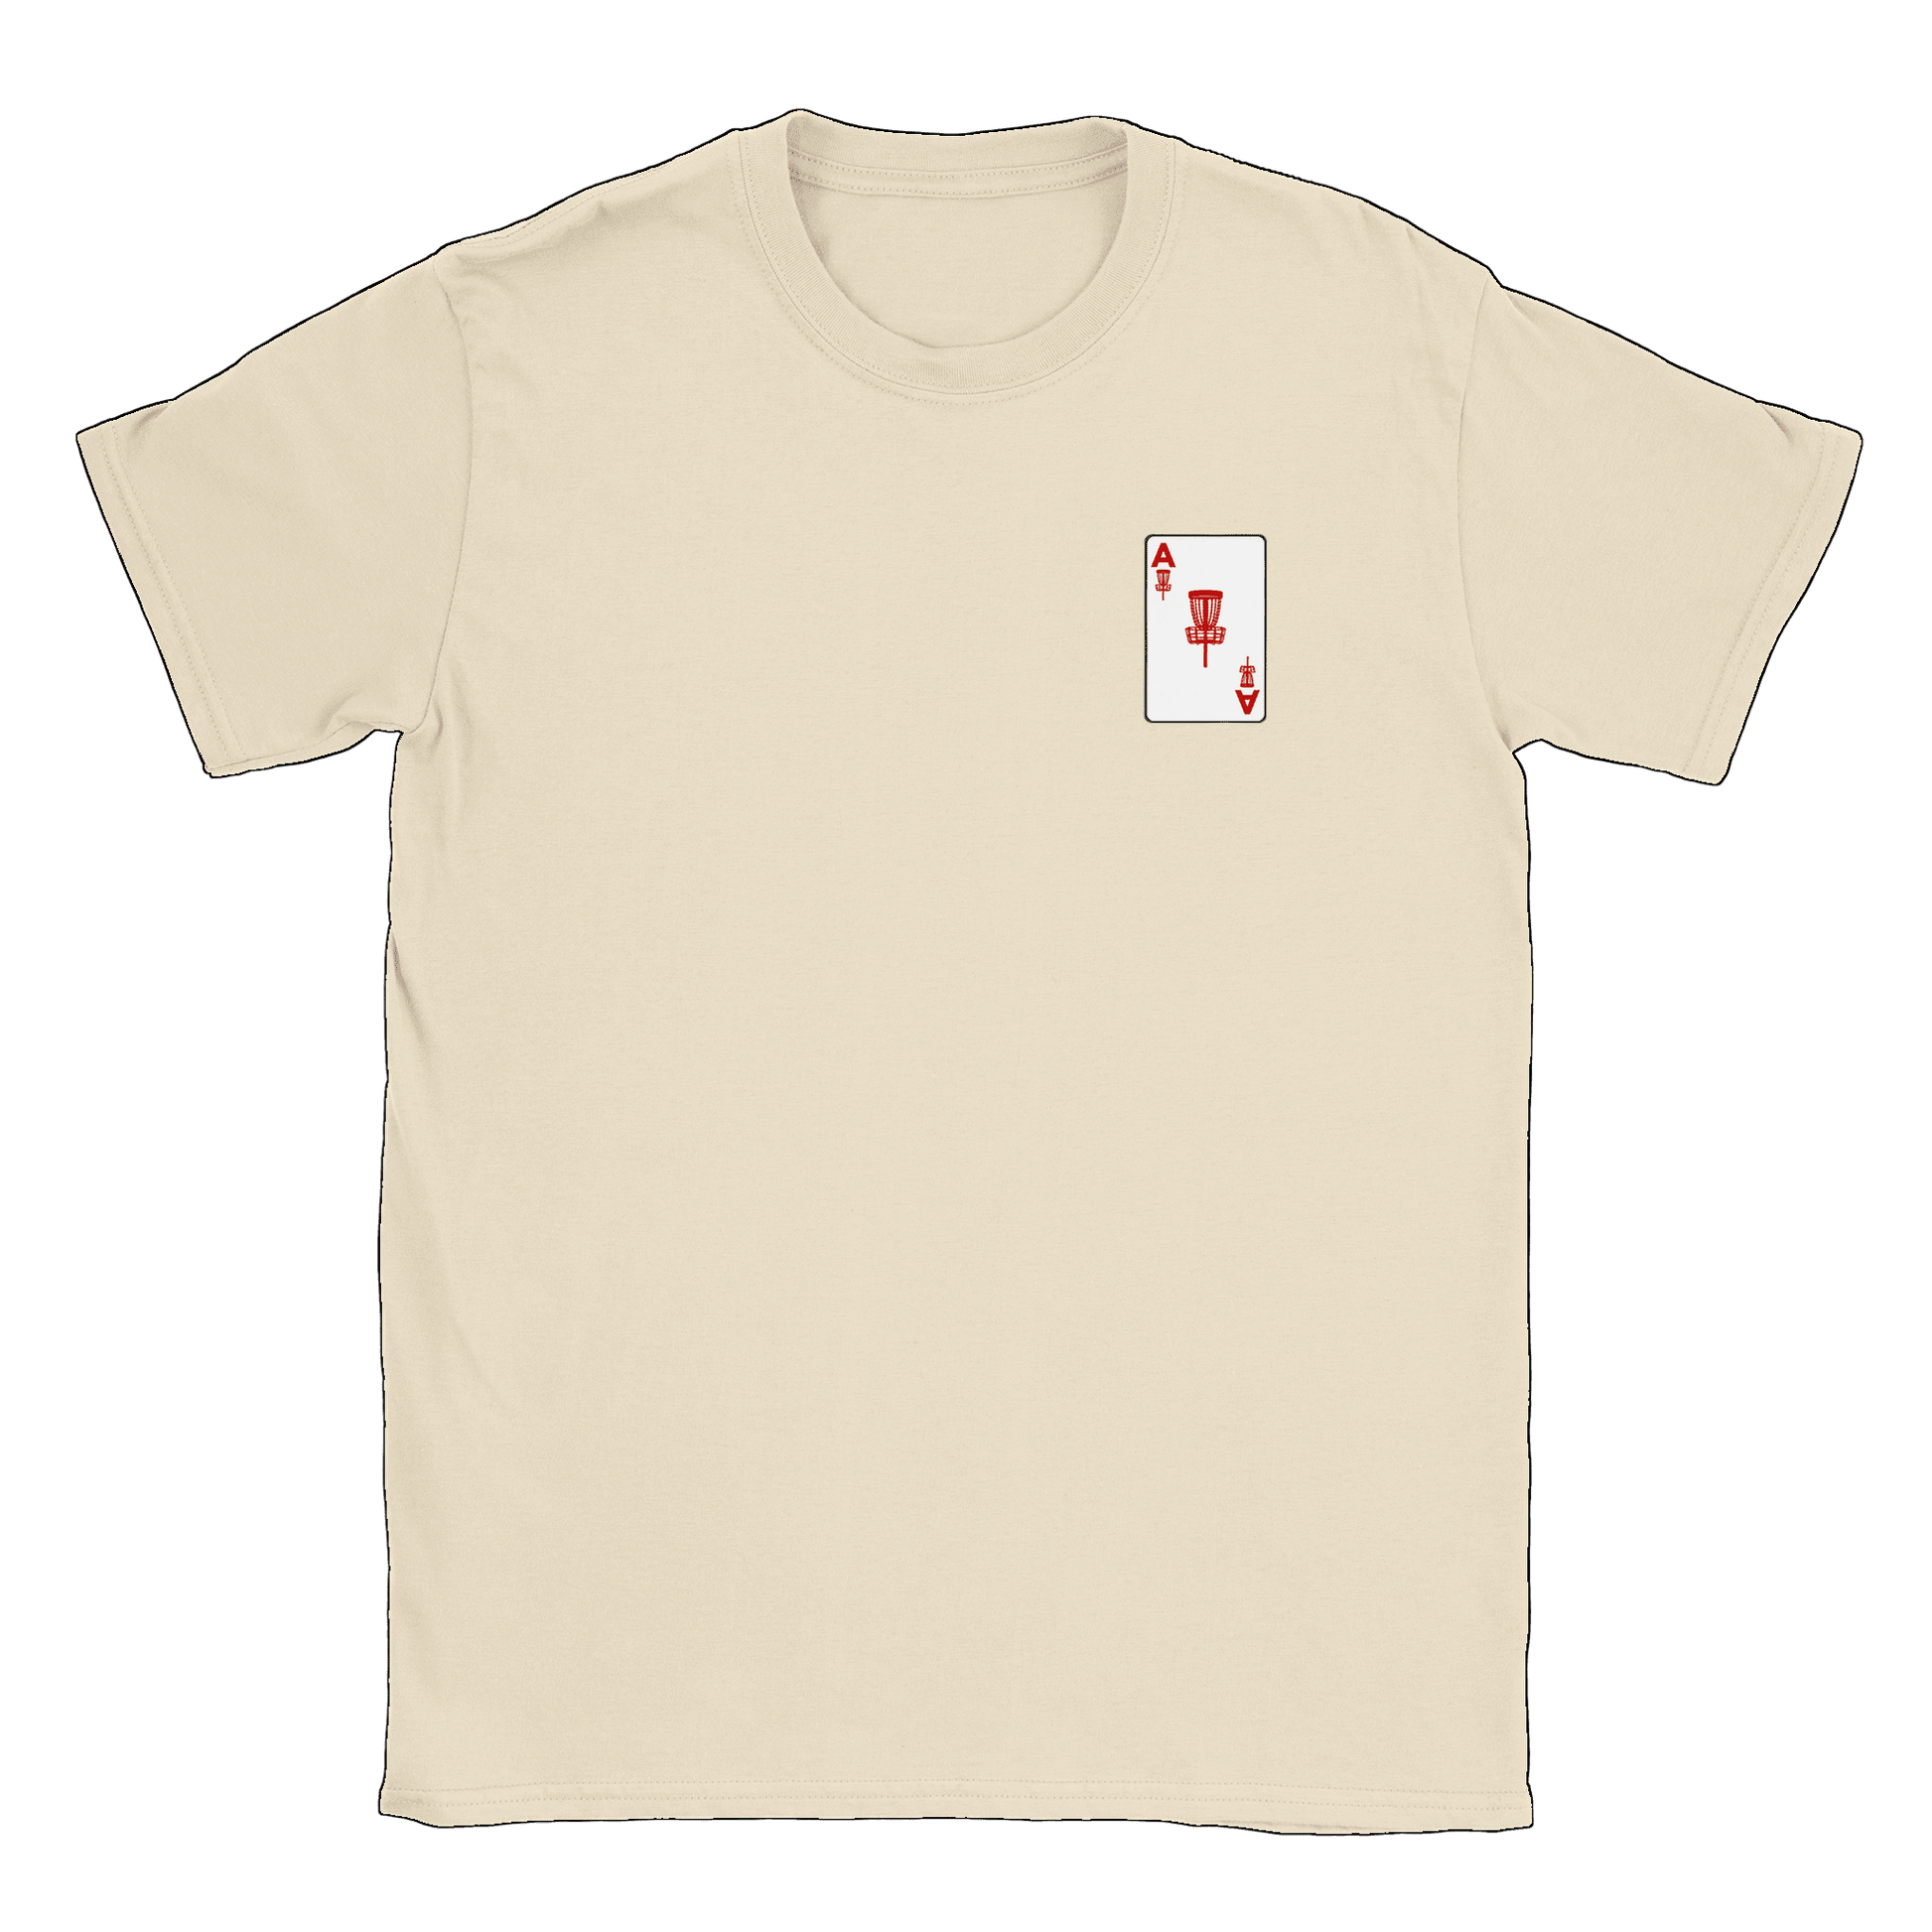 ACE Discgolf litet tryck - T-shirt Natural